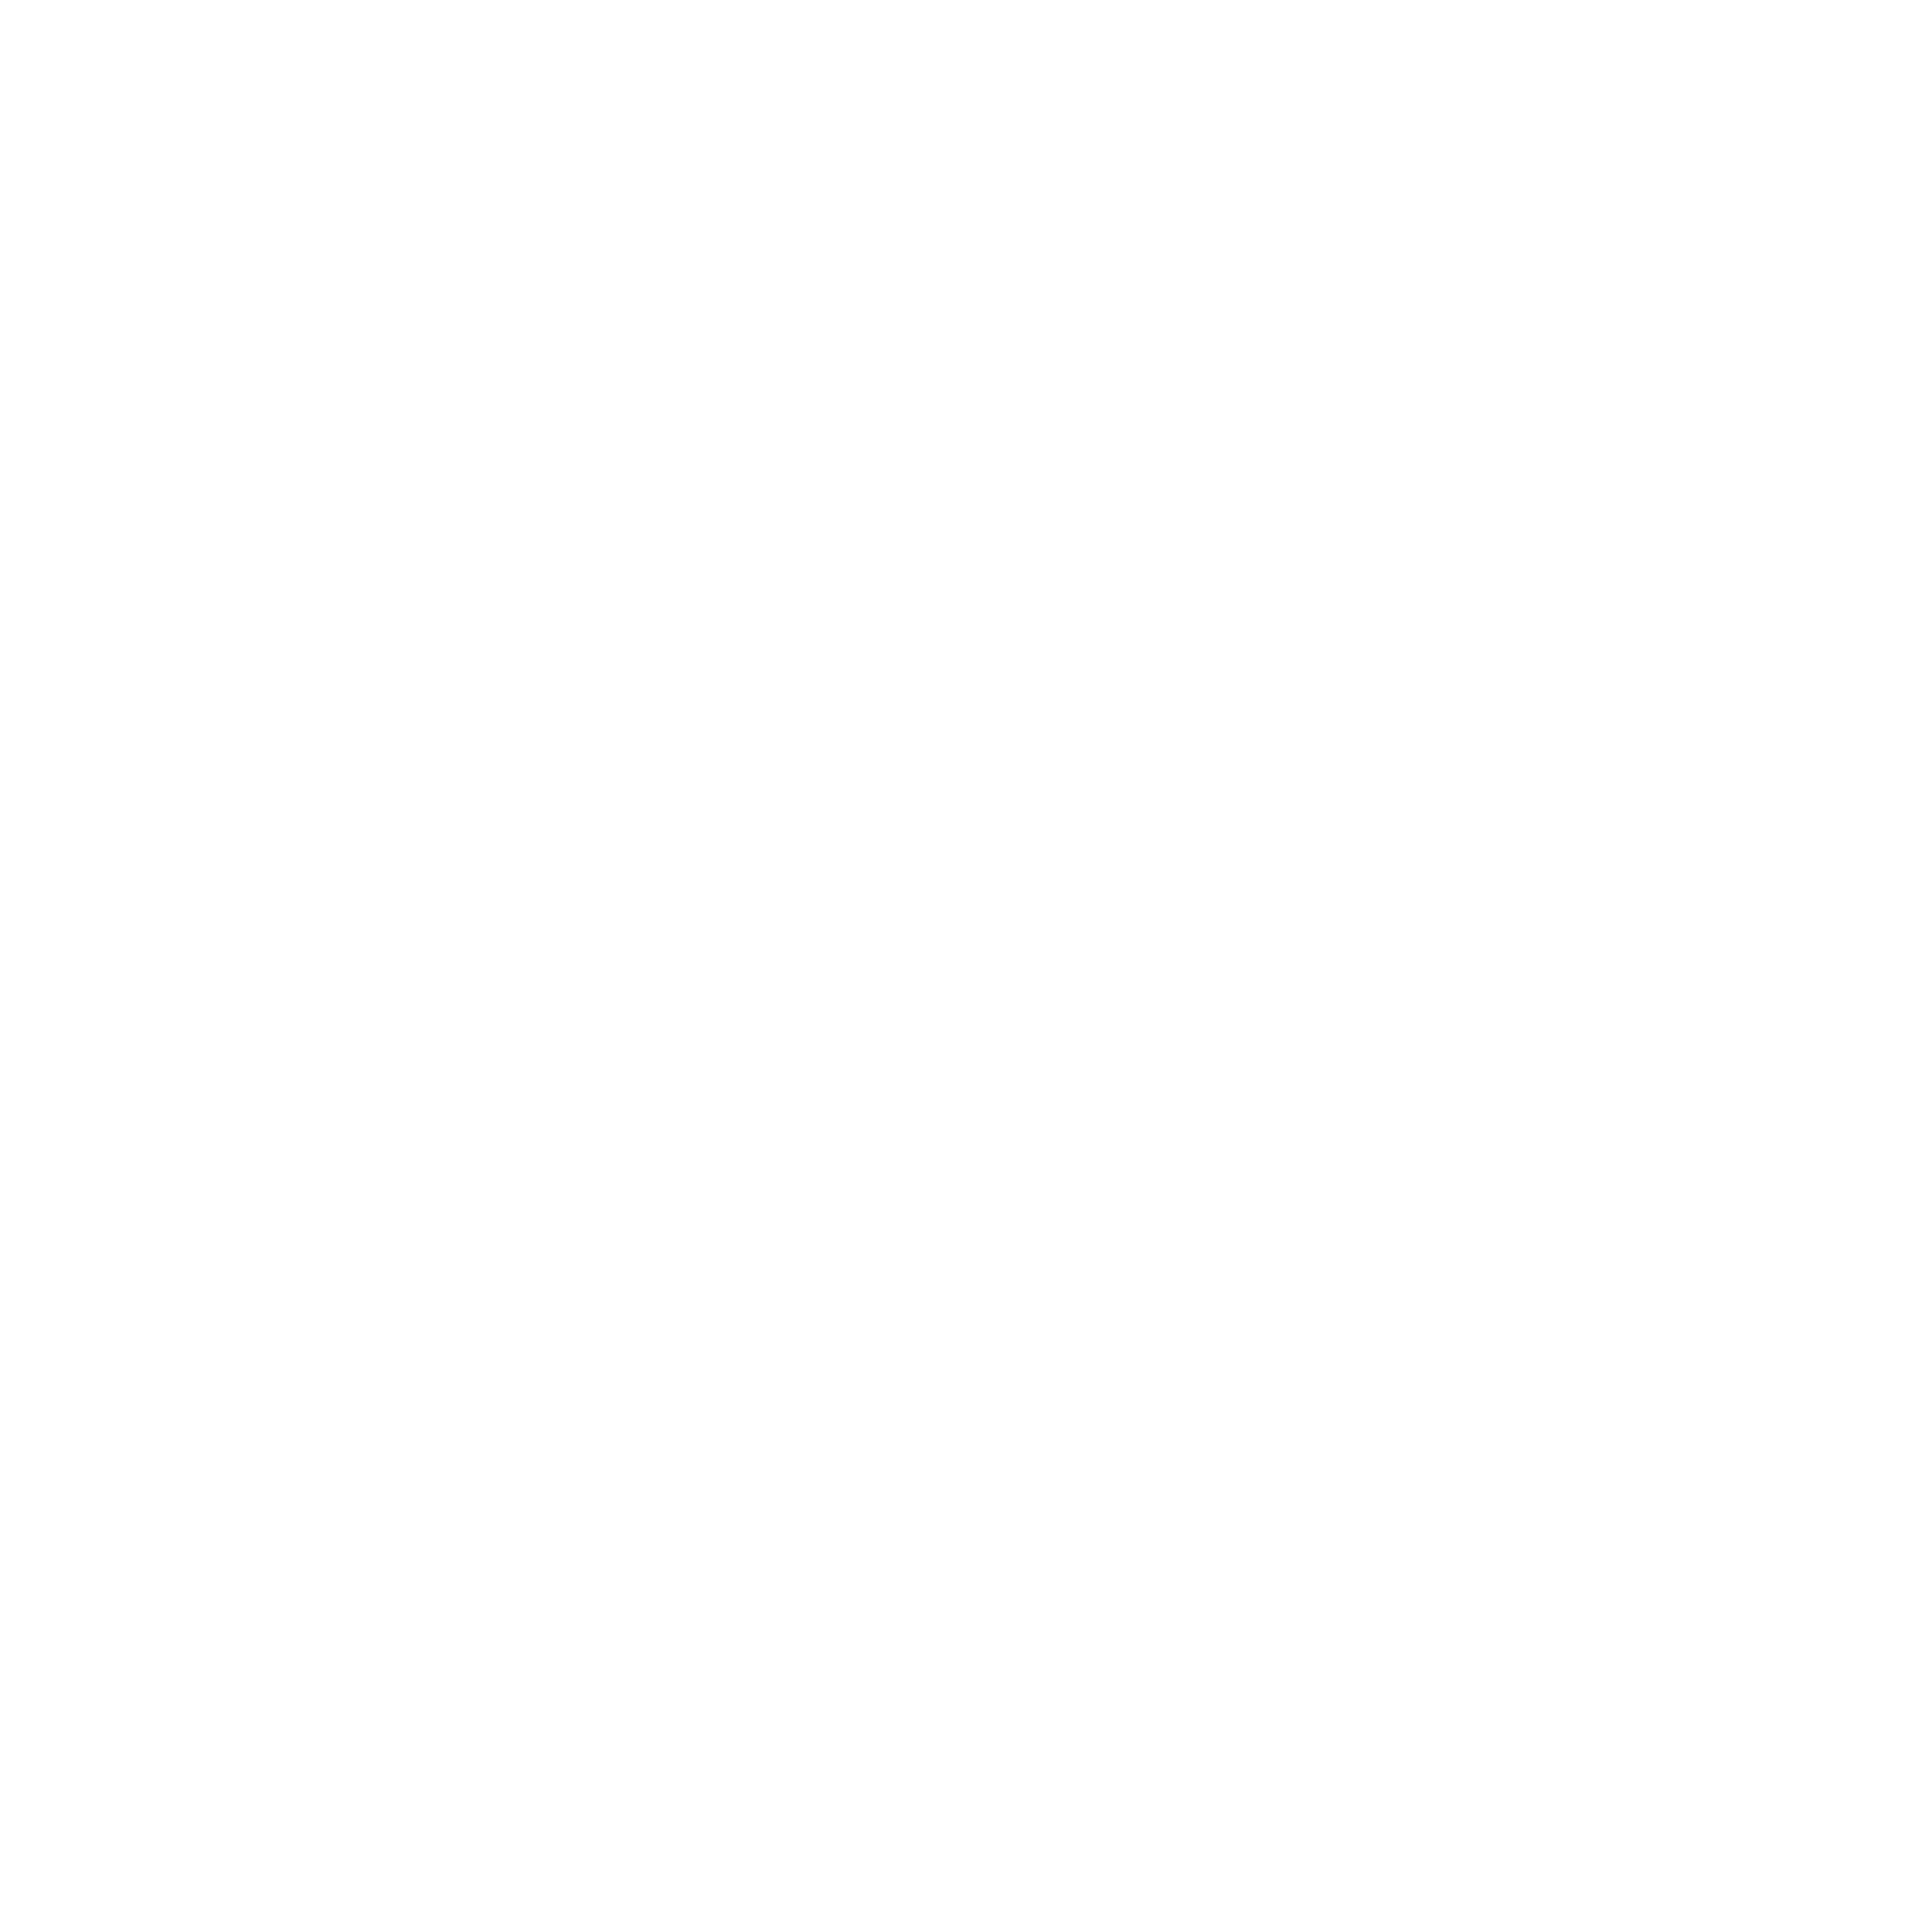 Daikin Logo - Daikin Logo PNG Transparent & SVG Vector